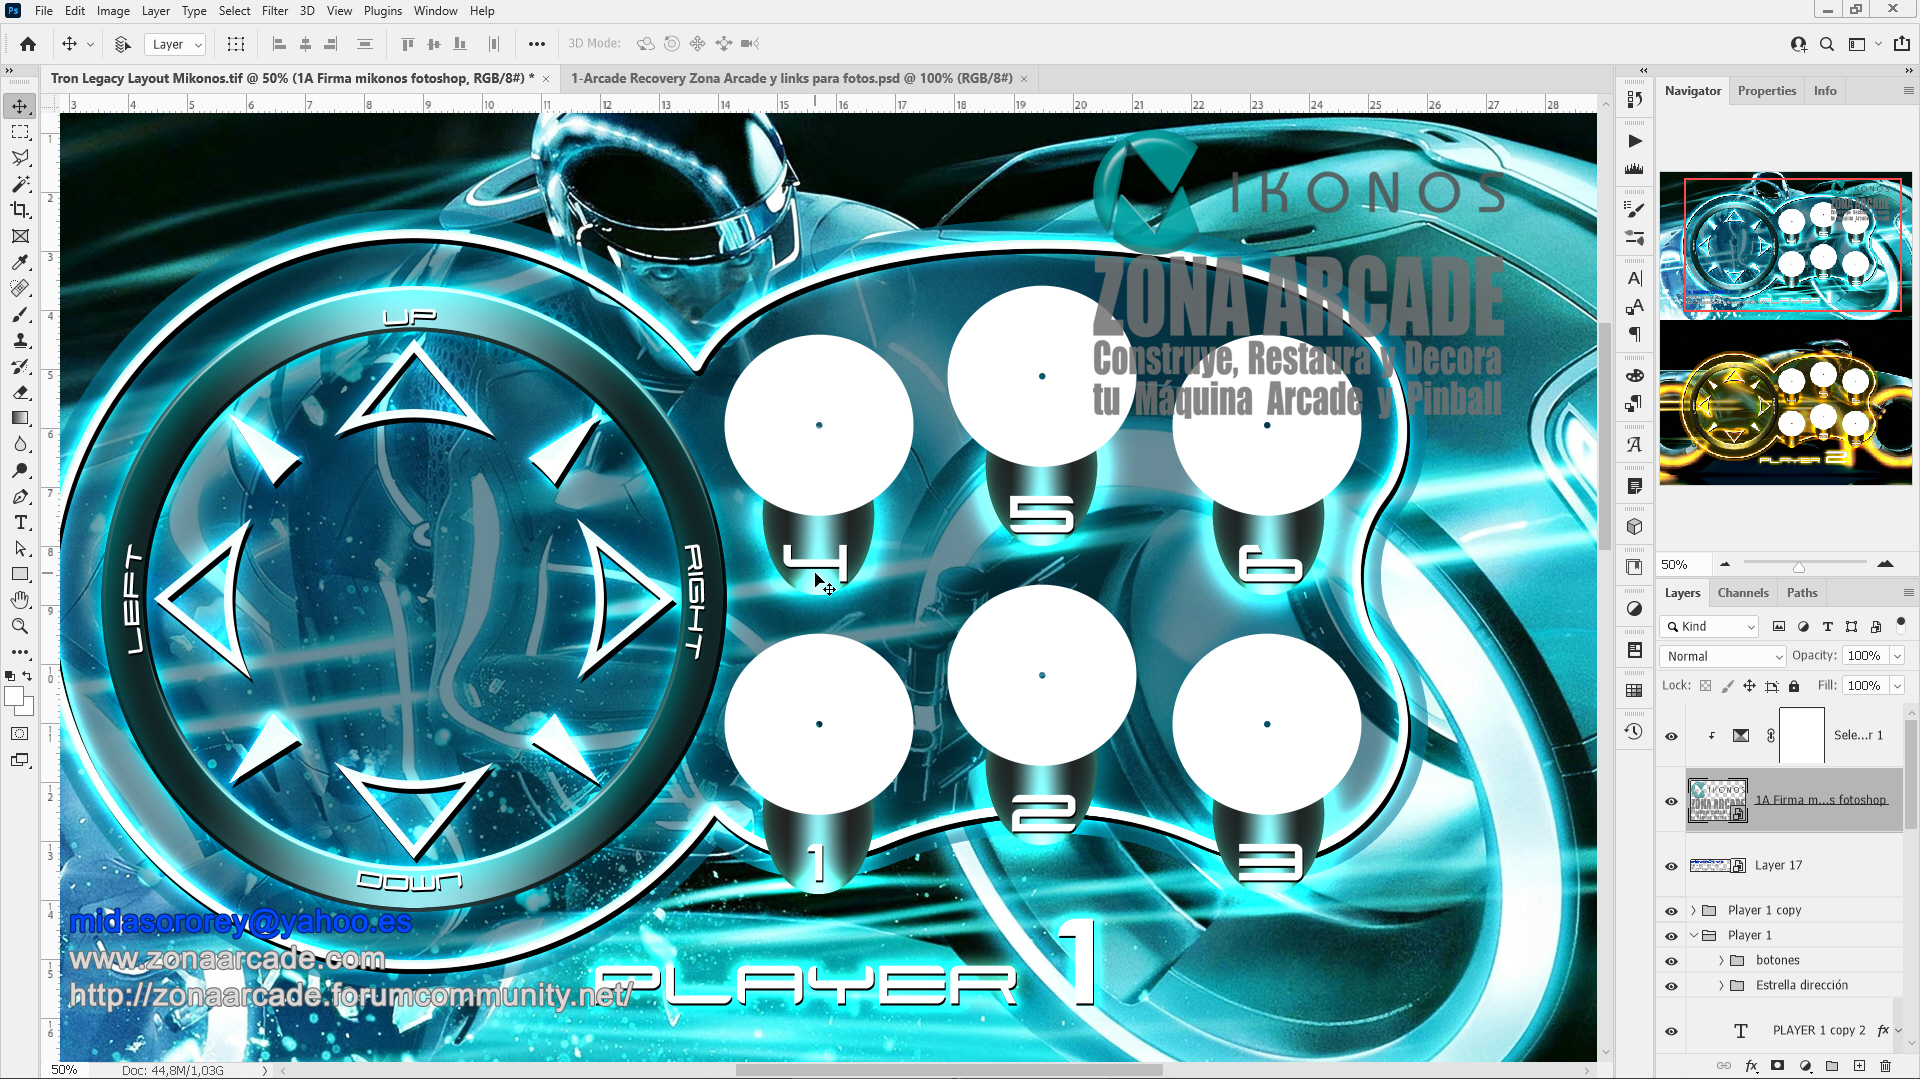 Tron-Legacy-Button-Joystick-Arcade-Layout-Designed-Mikonos11